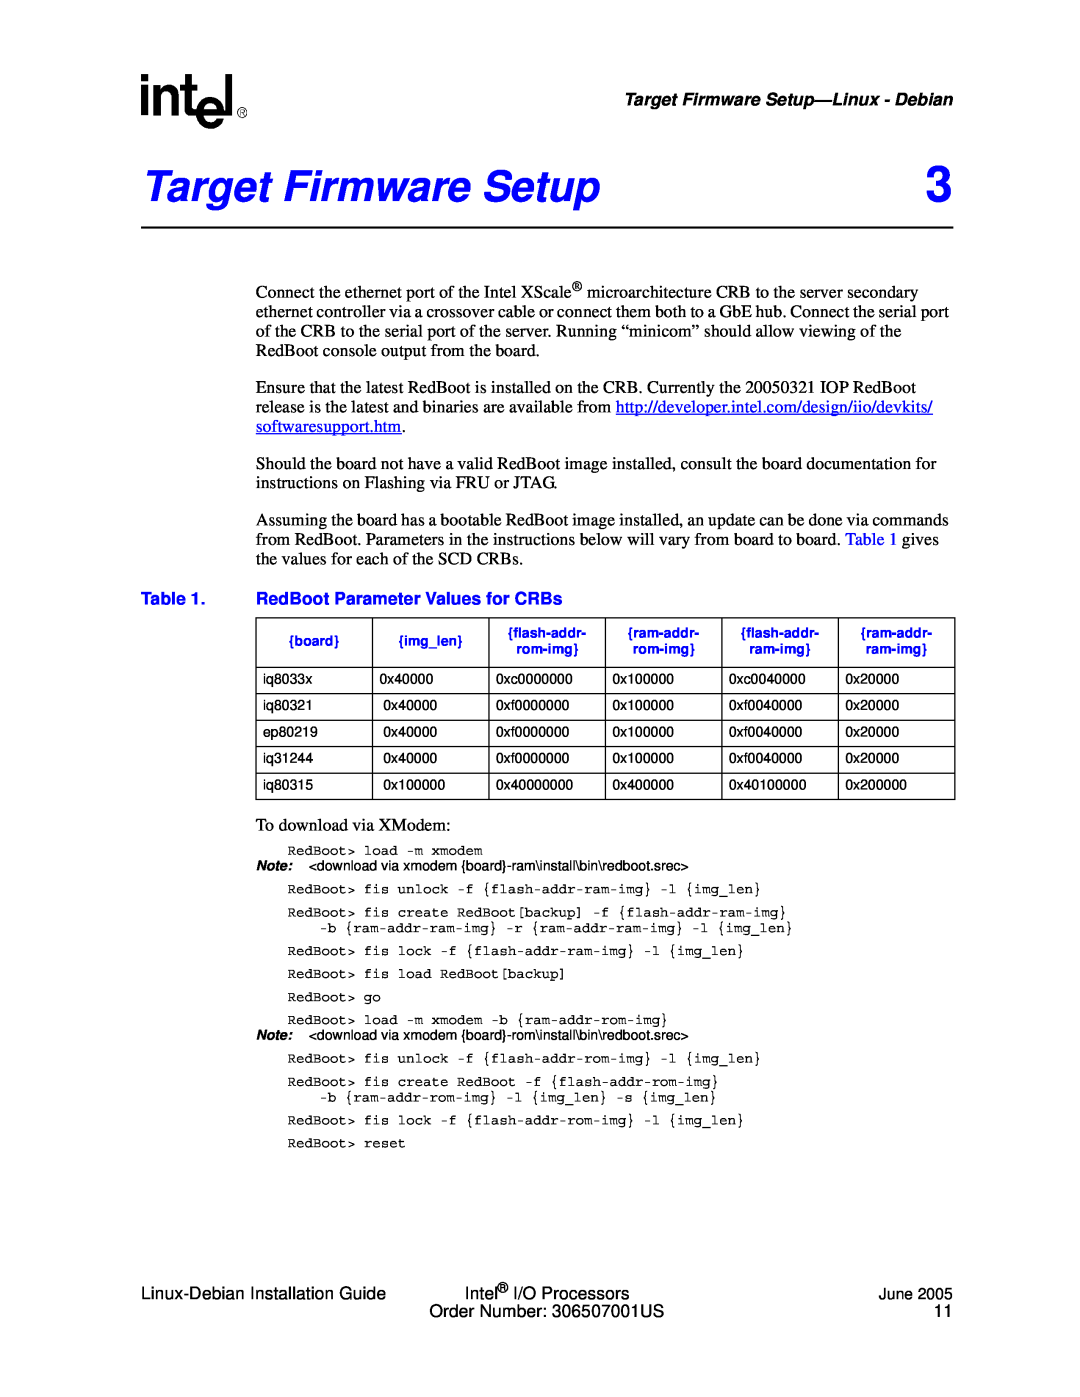 Intel I/O Processor manual Target Firmware Setup—Linux- Debian, Table, RedBoot Parameter Values for CRBs 